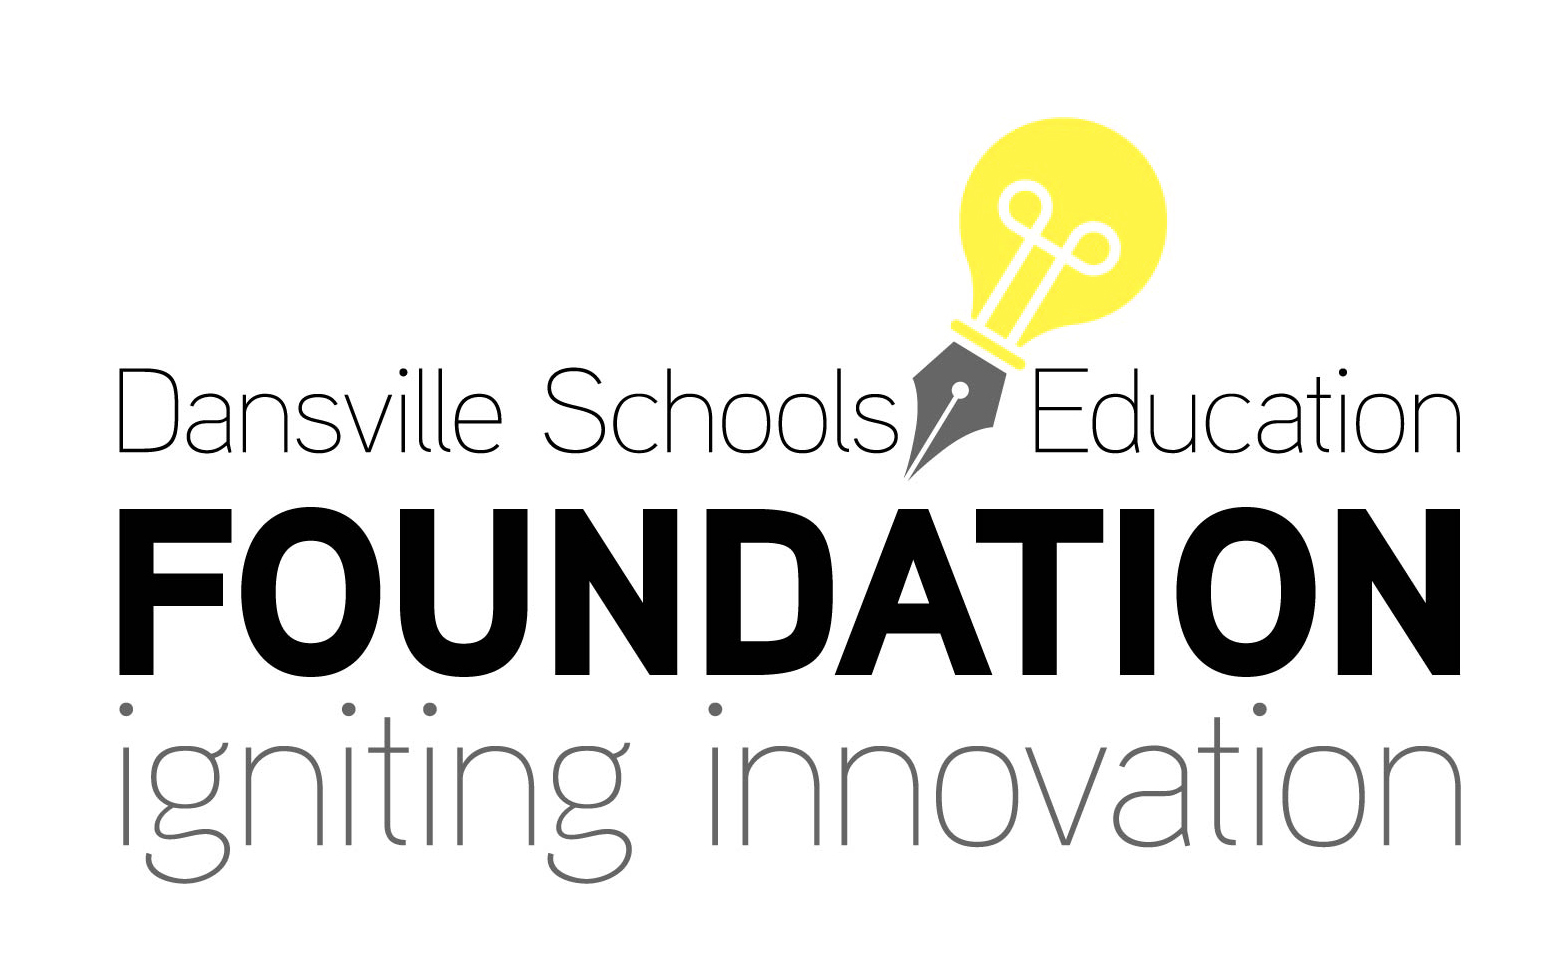 Dansville School Education Foundation igniting innovation